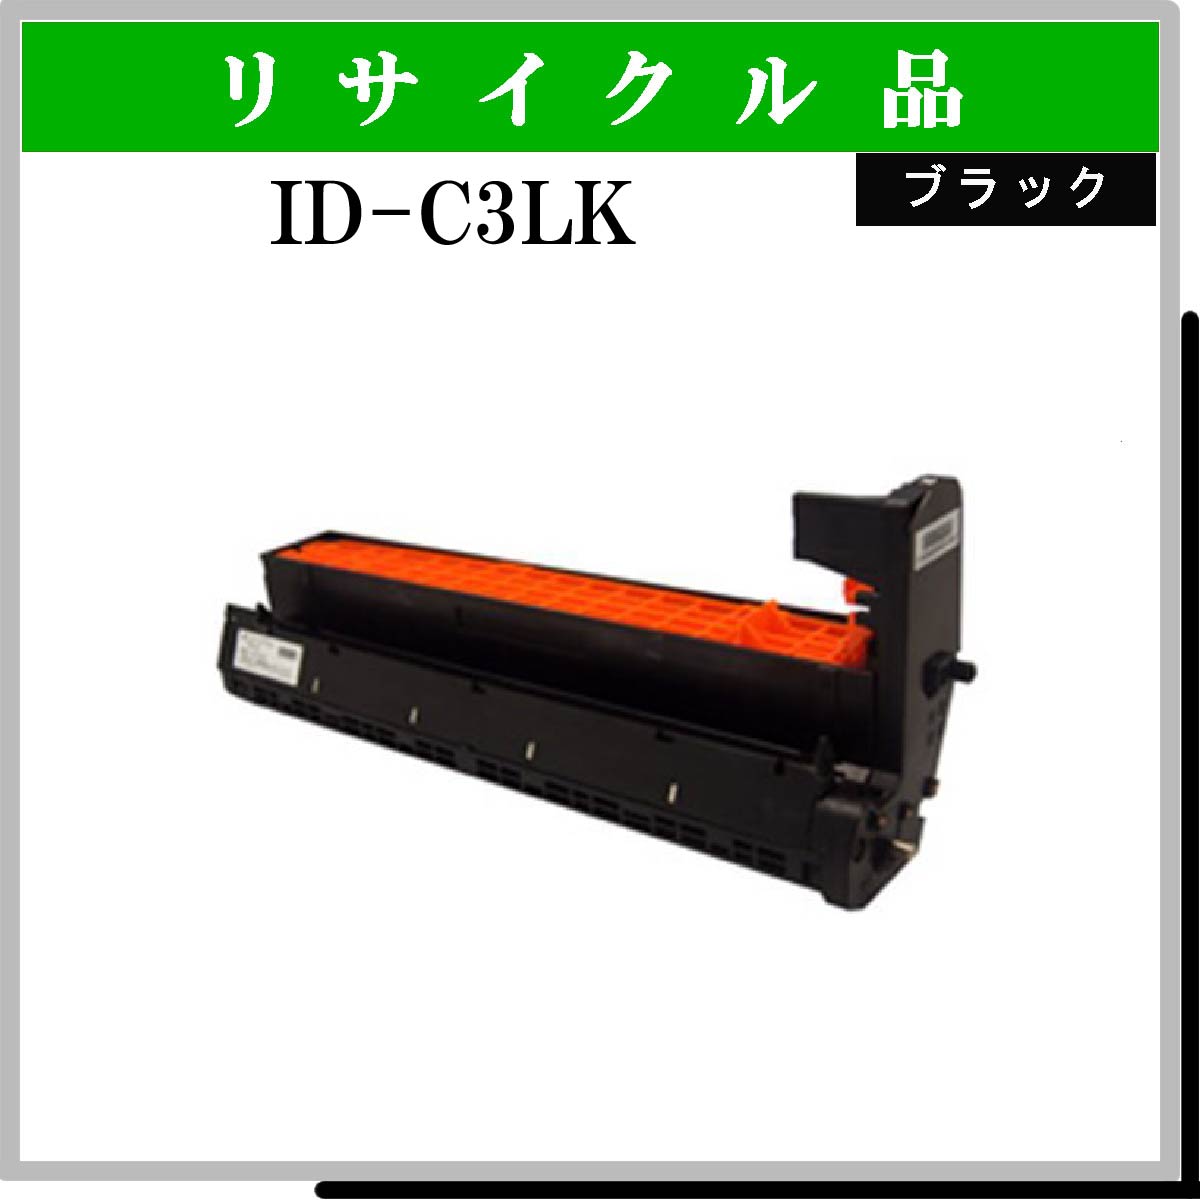 ID-C3LK